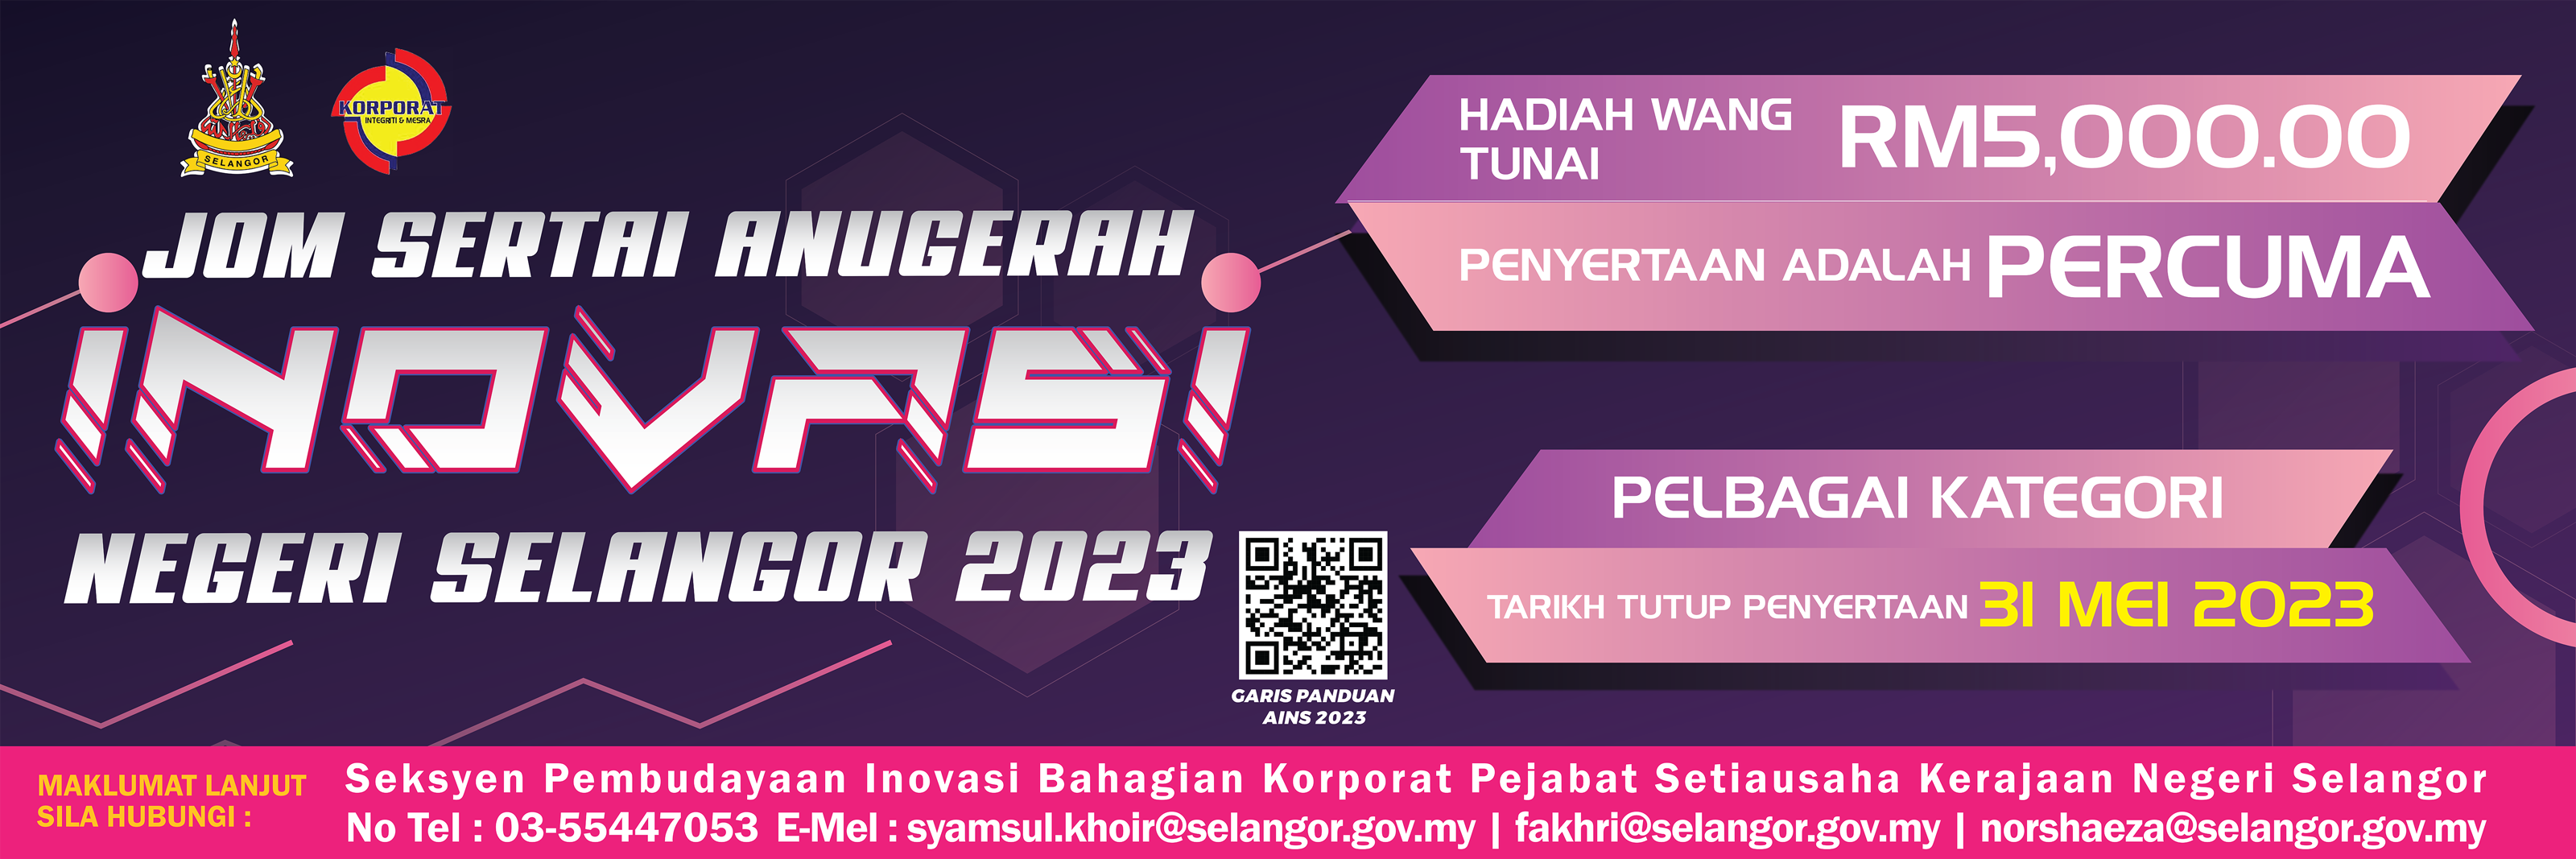 Anugerah Inovasi Selangor AINS 2023 tutup 31 Mei 2